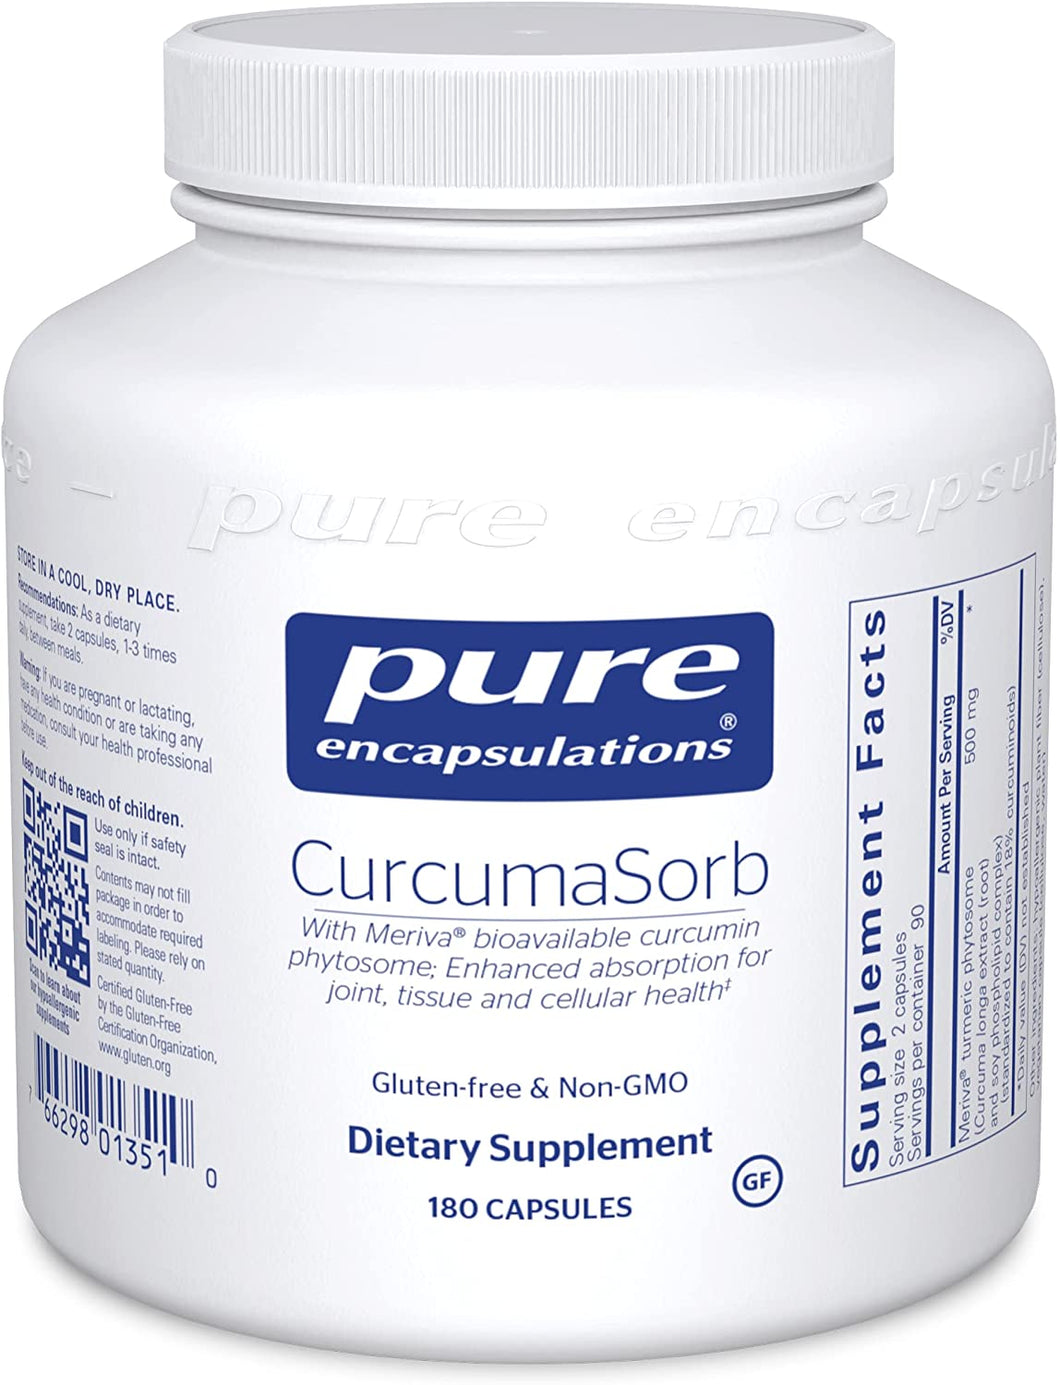 Pure Encapsulations CurcumaSorb 180cap